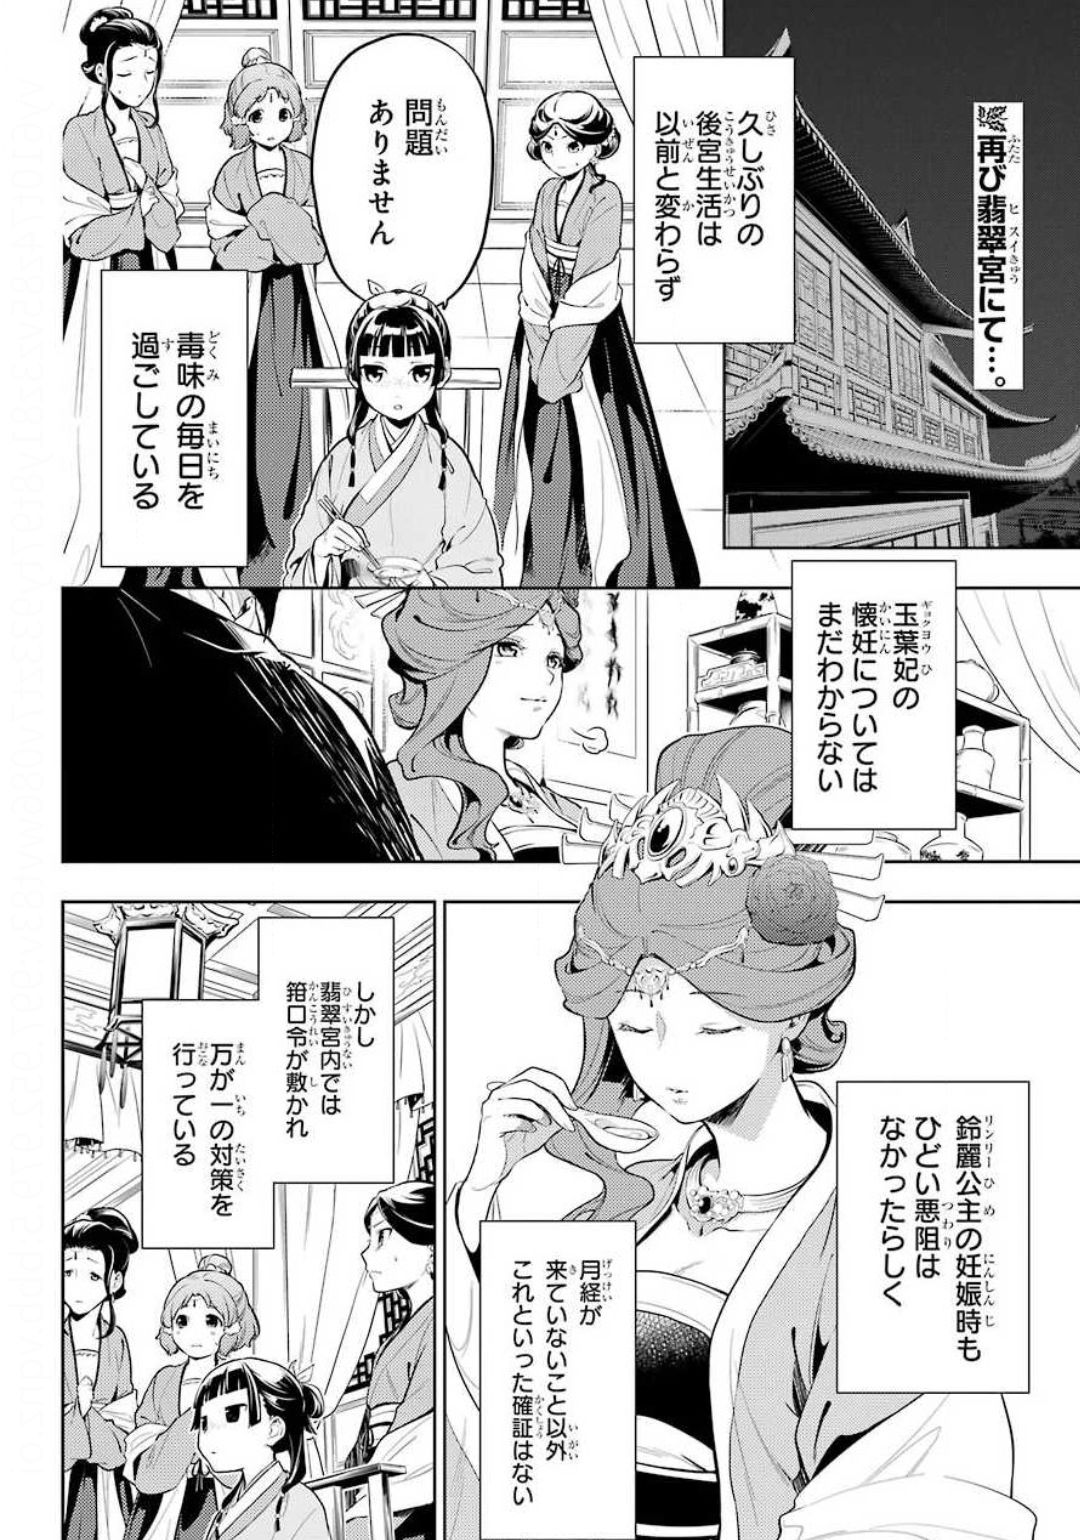 Kusuriya no Hitorigoto - Chapter 35.1 - Page 2